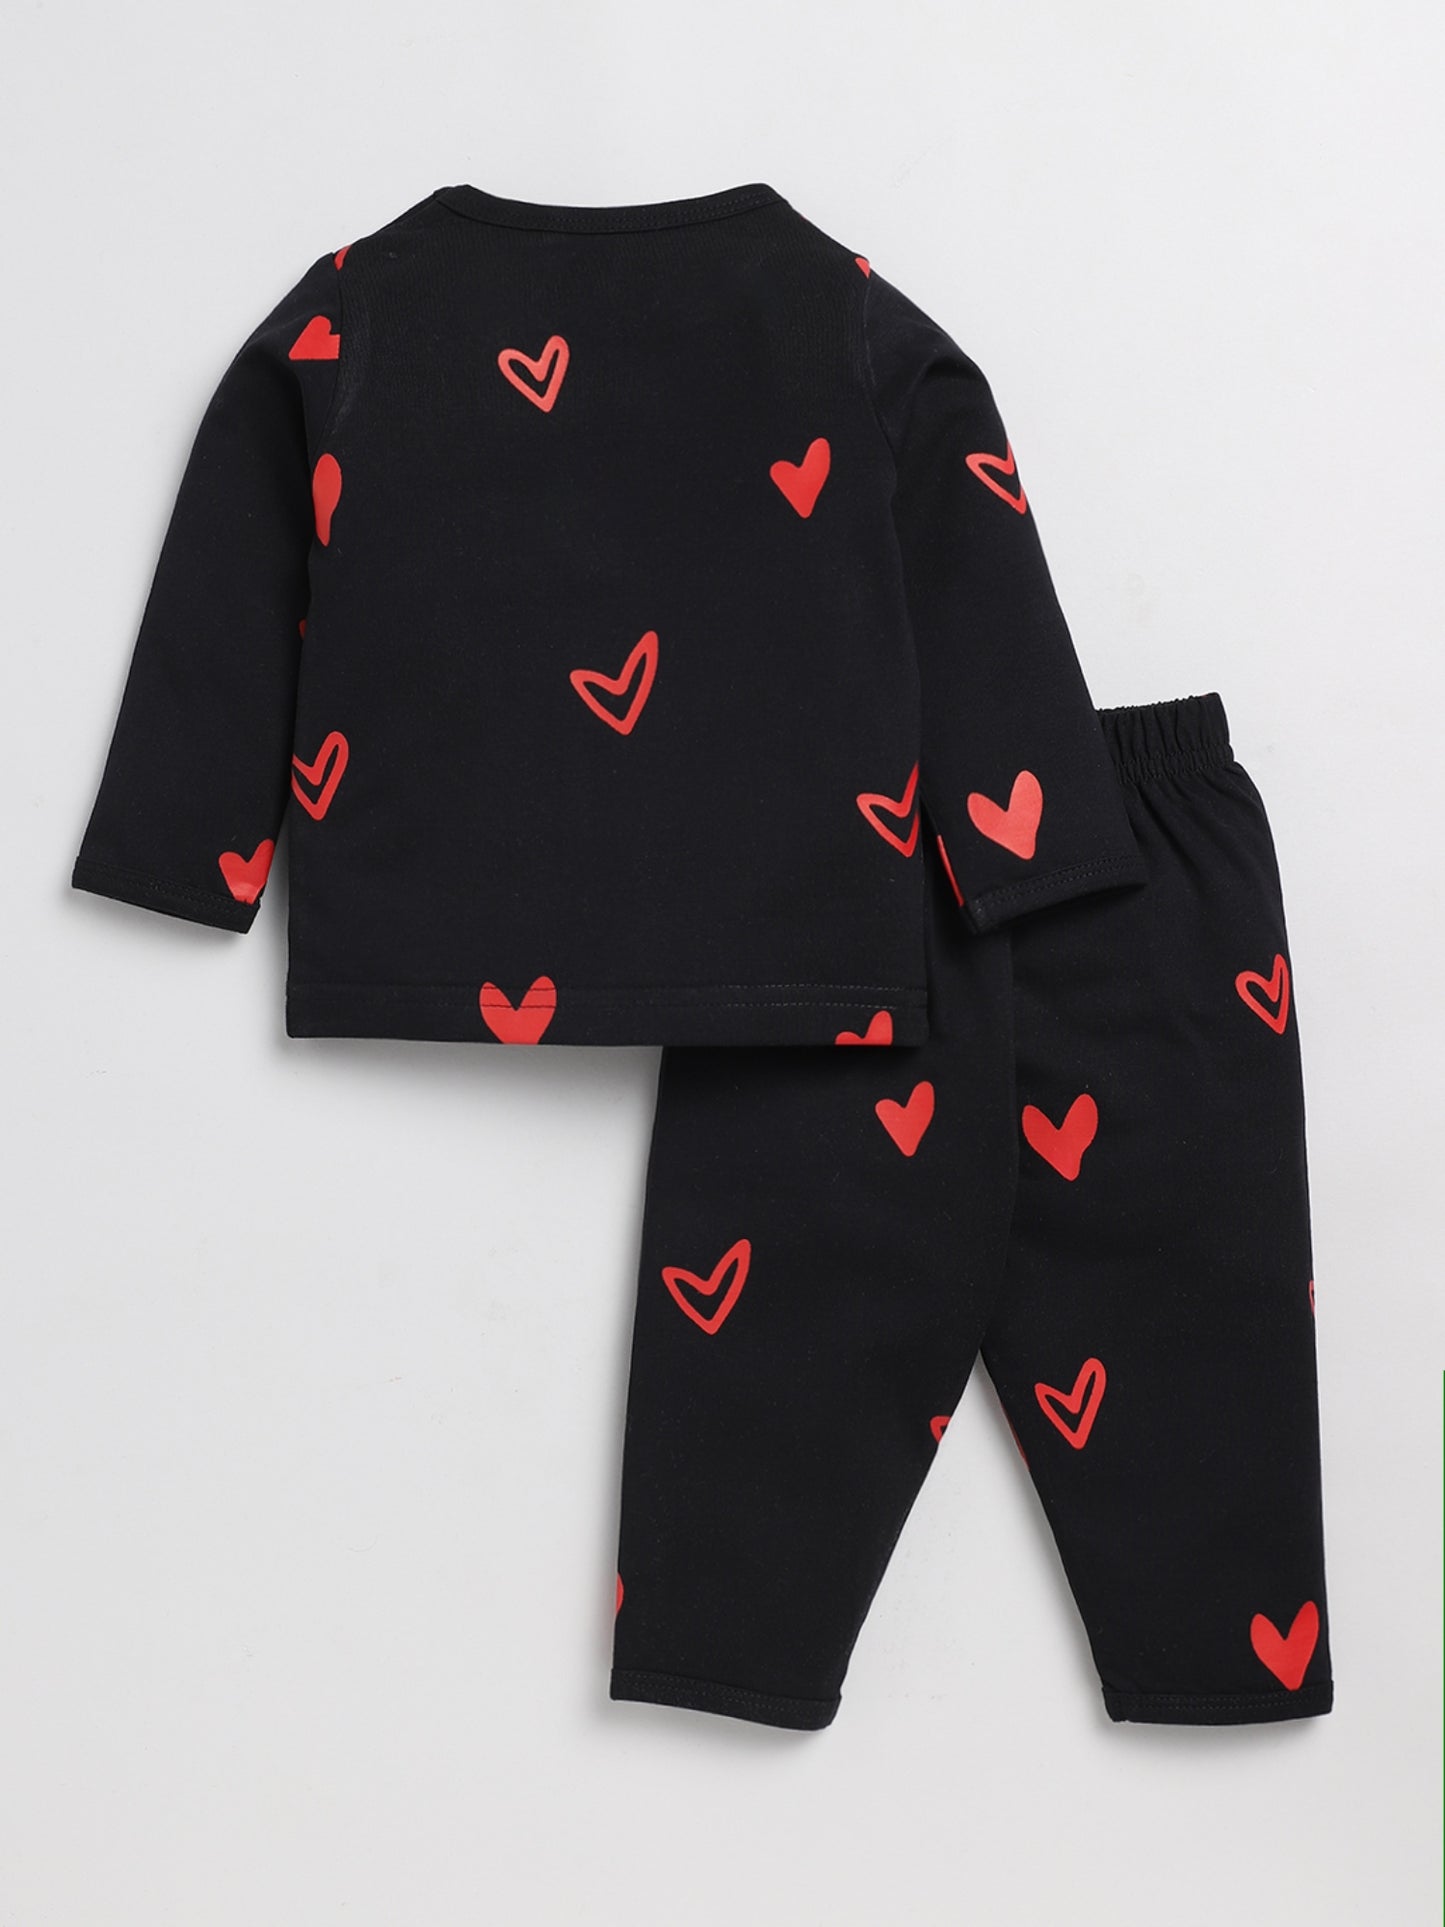 All Hearts Print Black Full Sleeve Nightwear Set